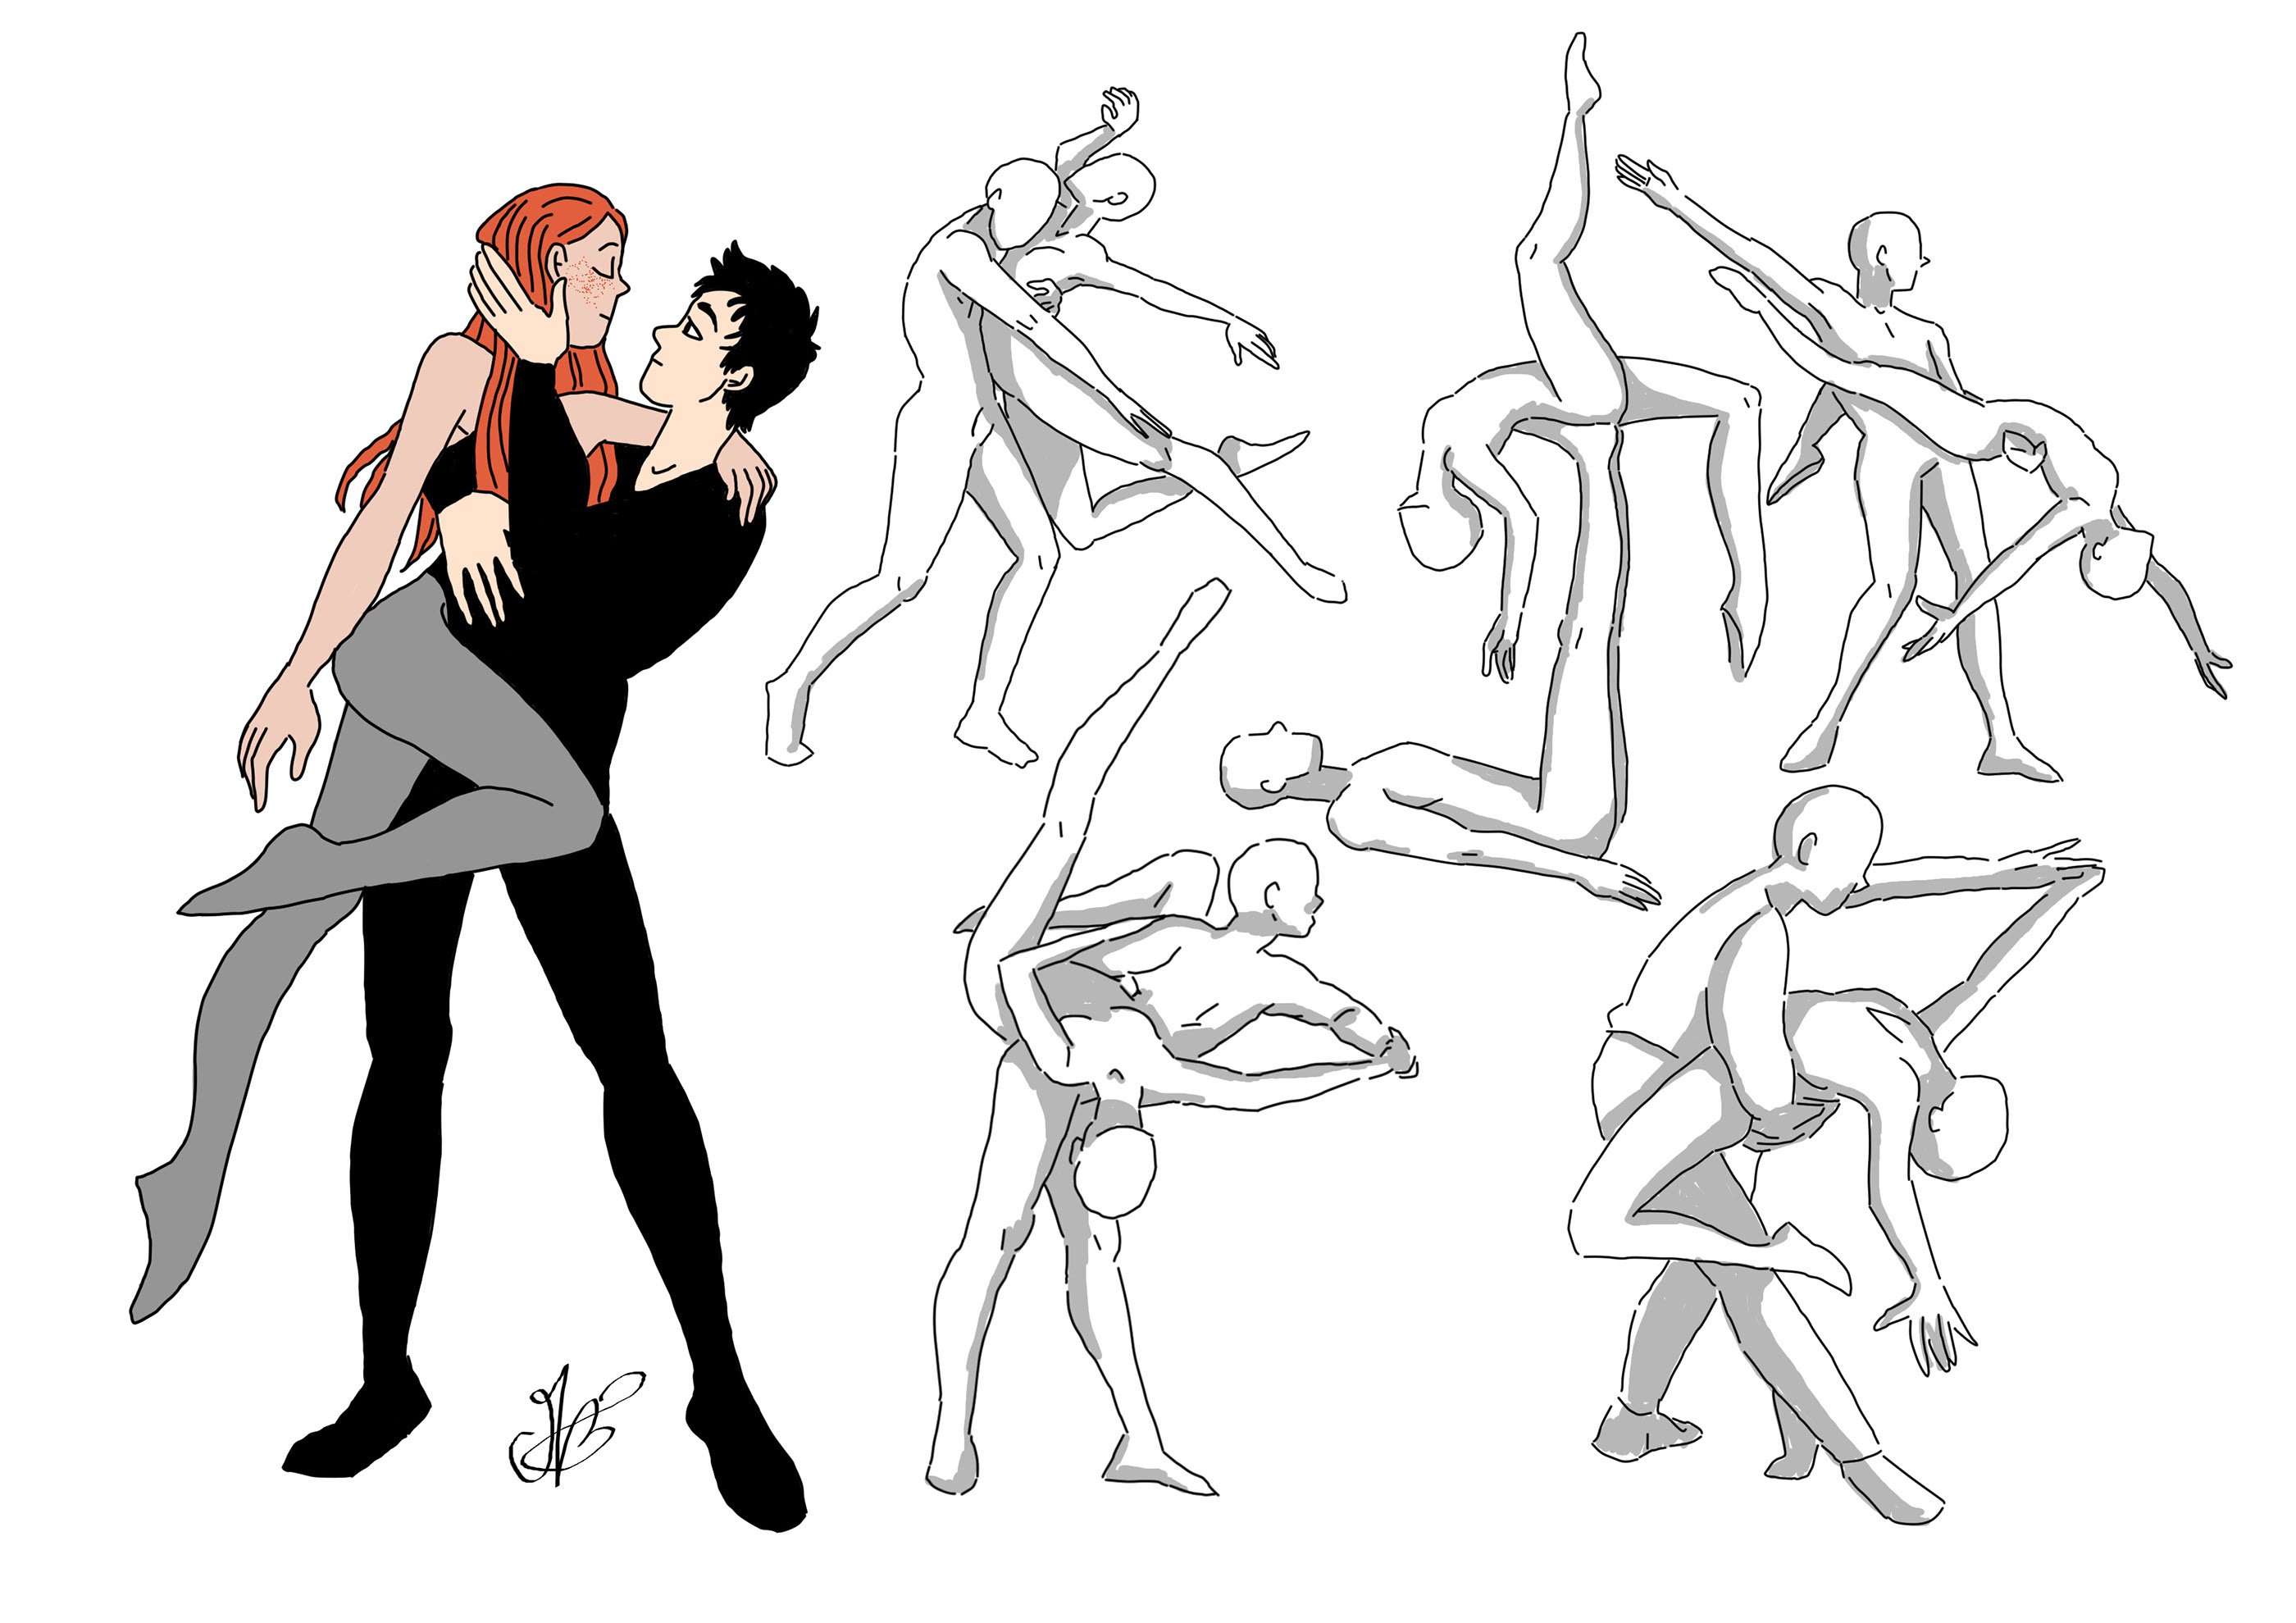 Couple dancing (poses study). 